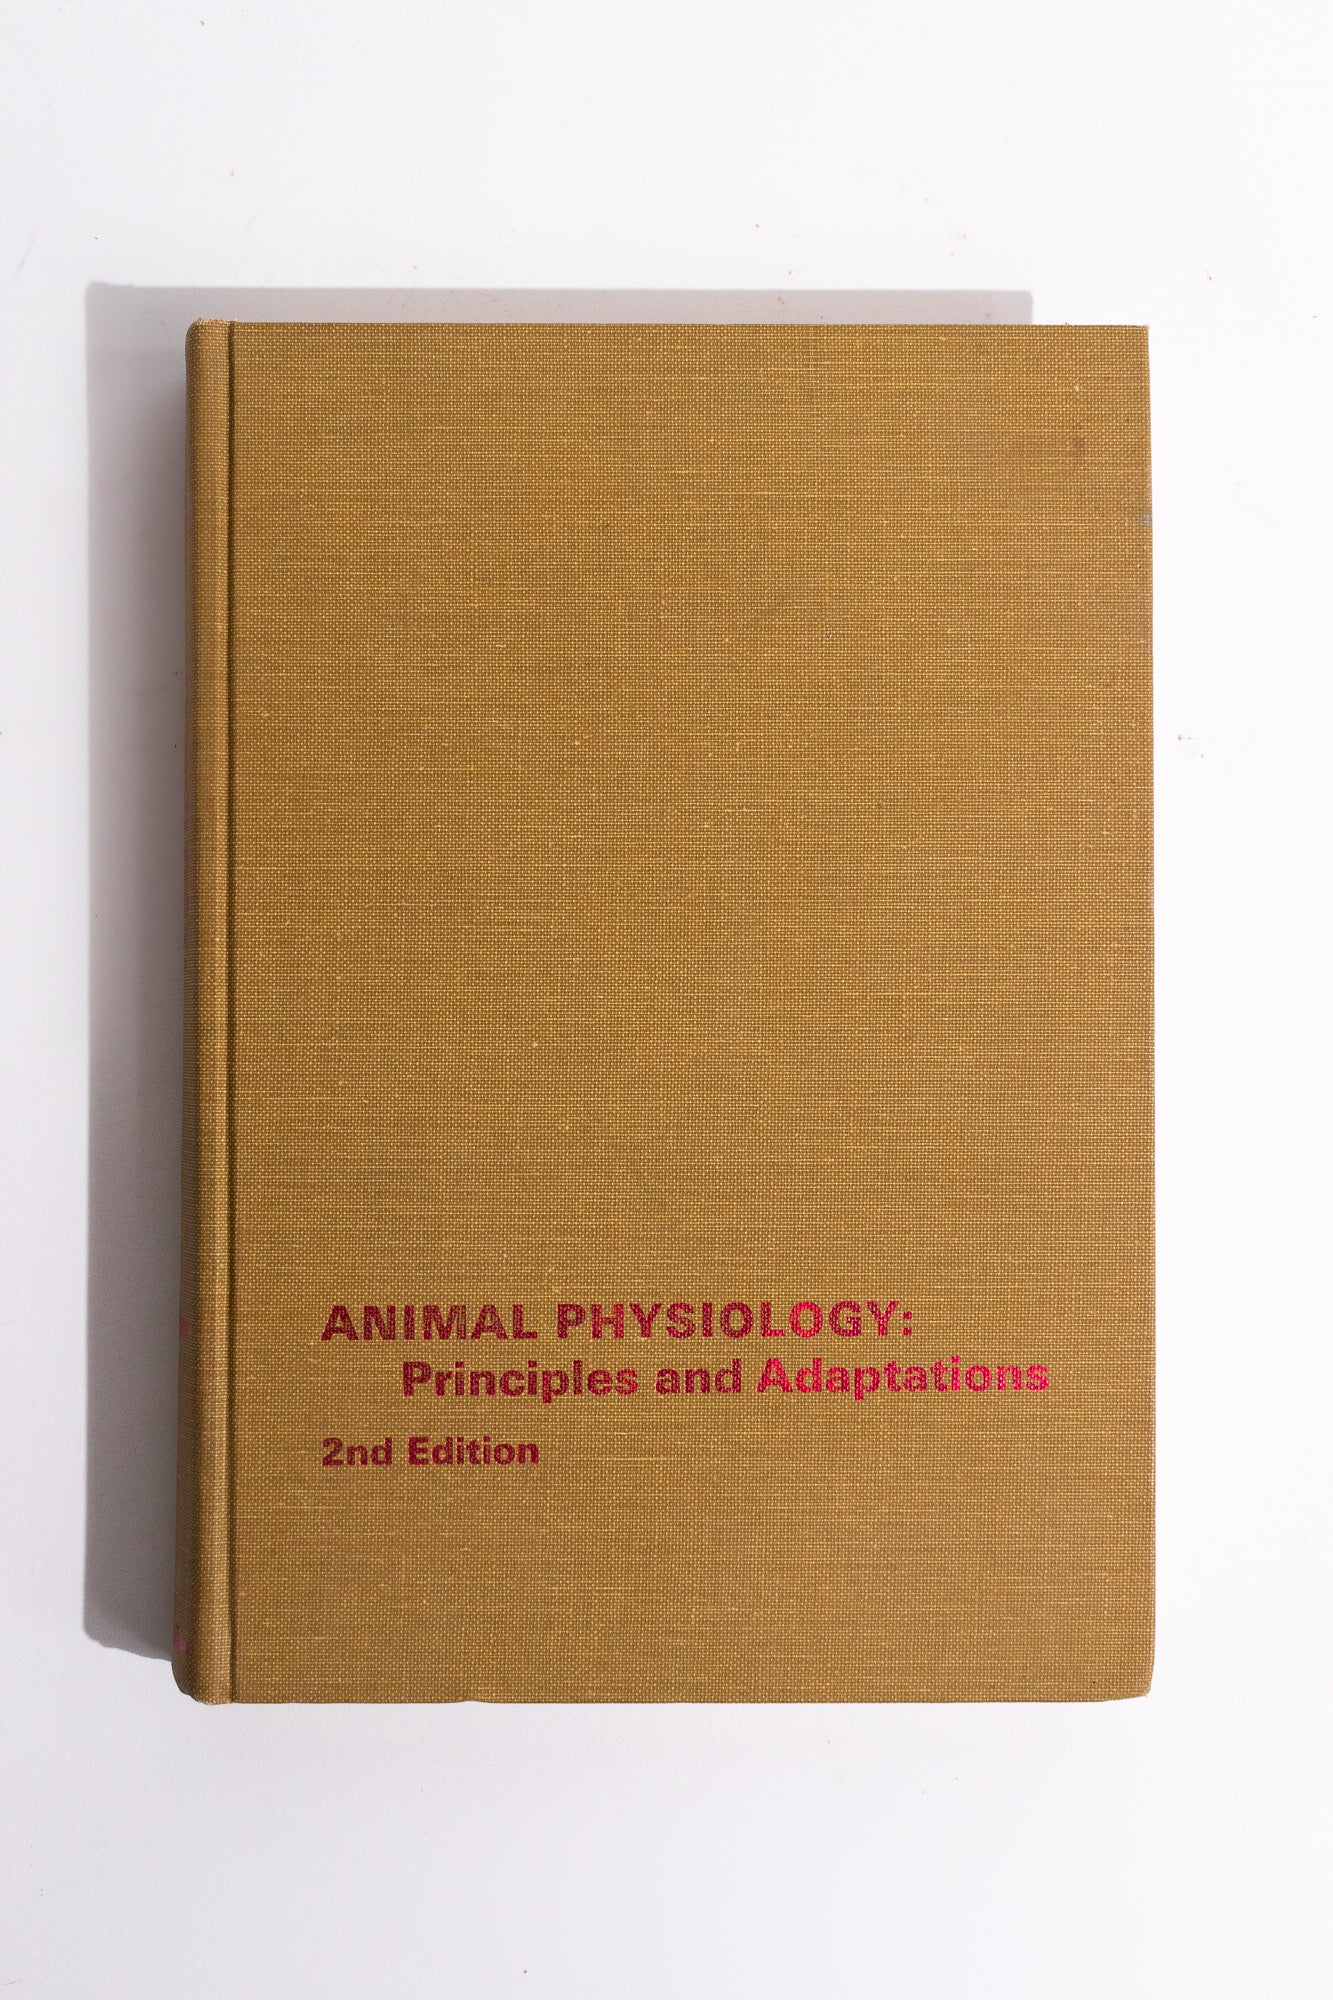 Animal Physiology: Principles and Adaptations